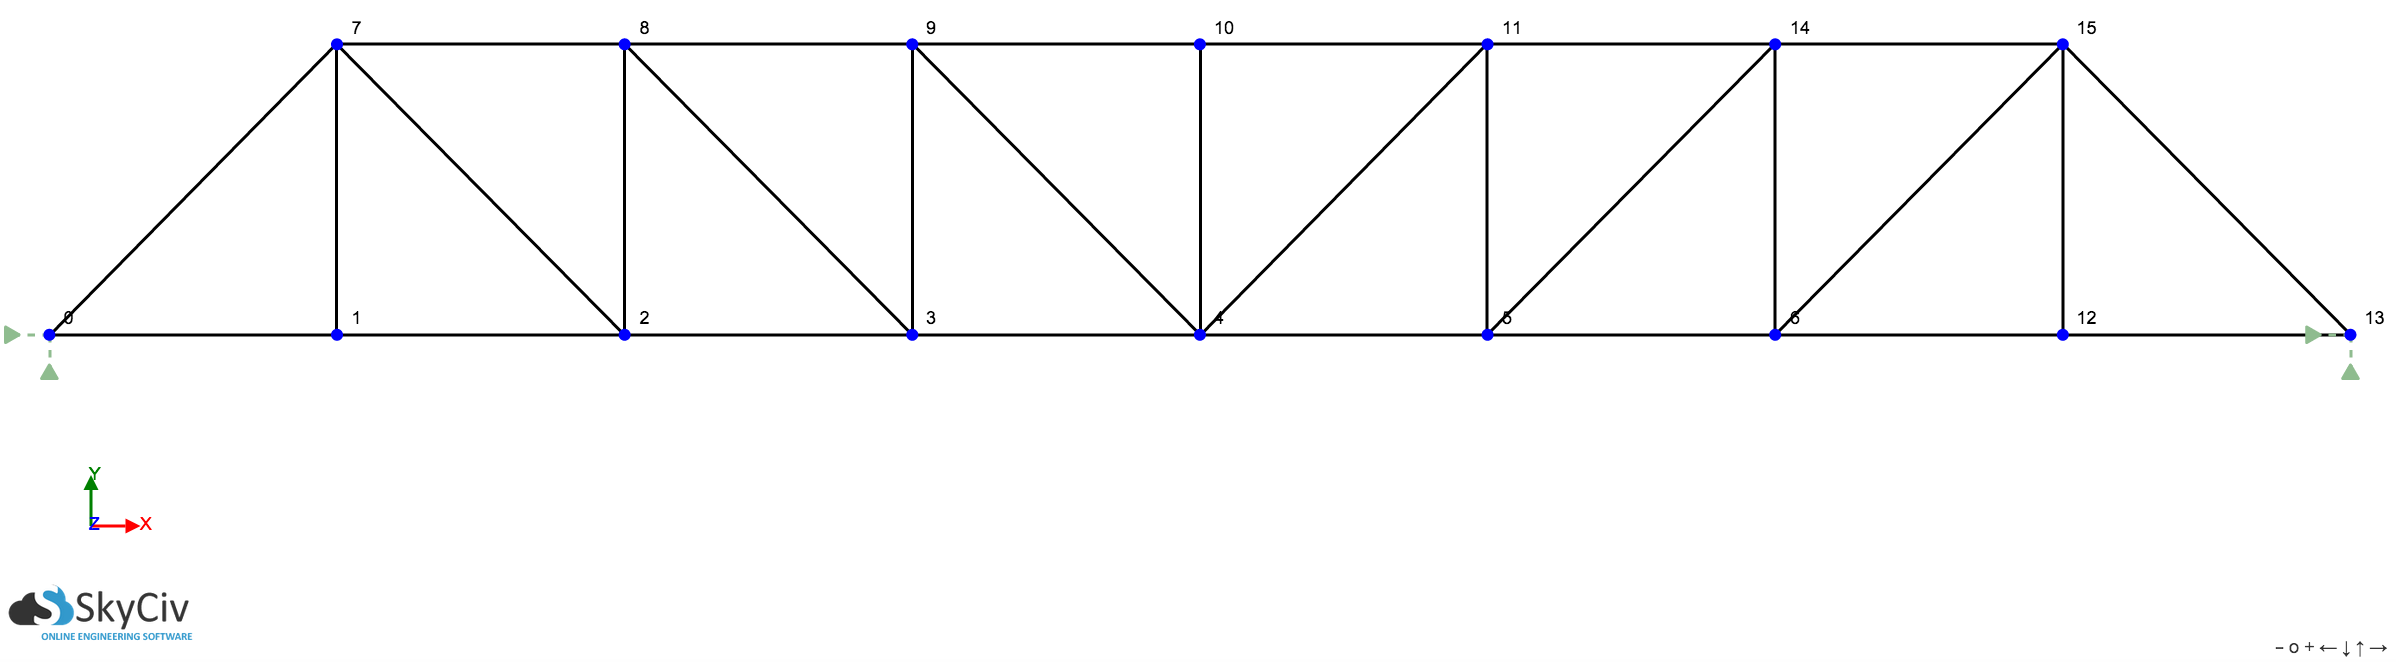 example of a pratt truss as shown by SkyCiv Truss software, types of truss